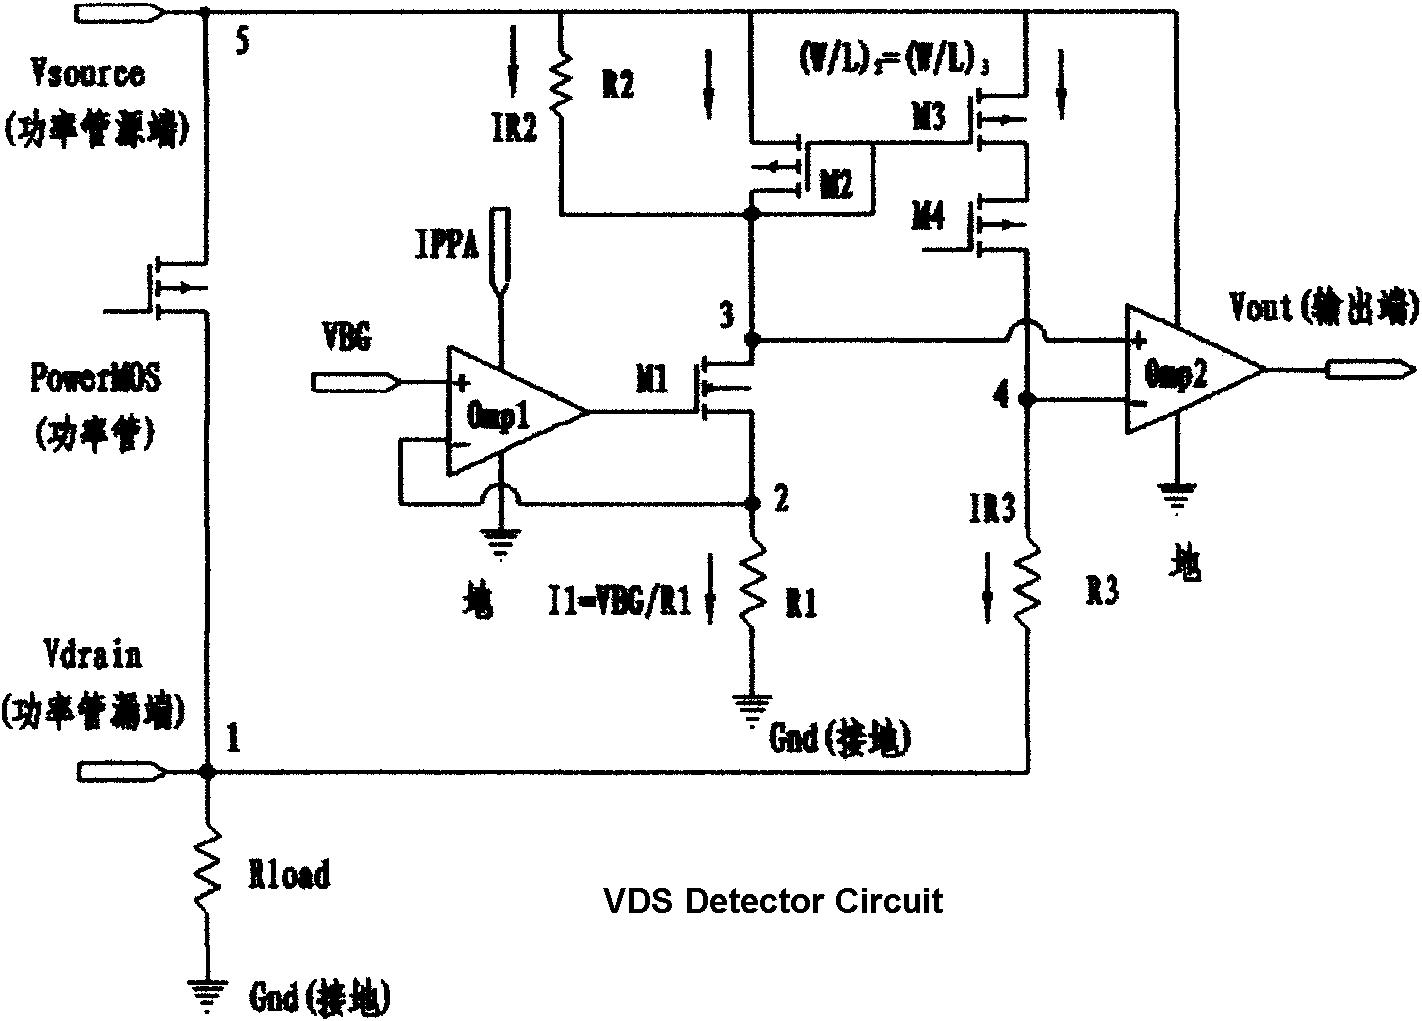 High-threshold value voltage comparison circuit consisting of high-precision low-voltage comparator